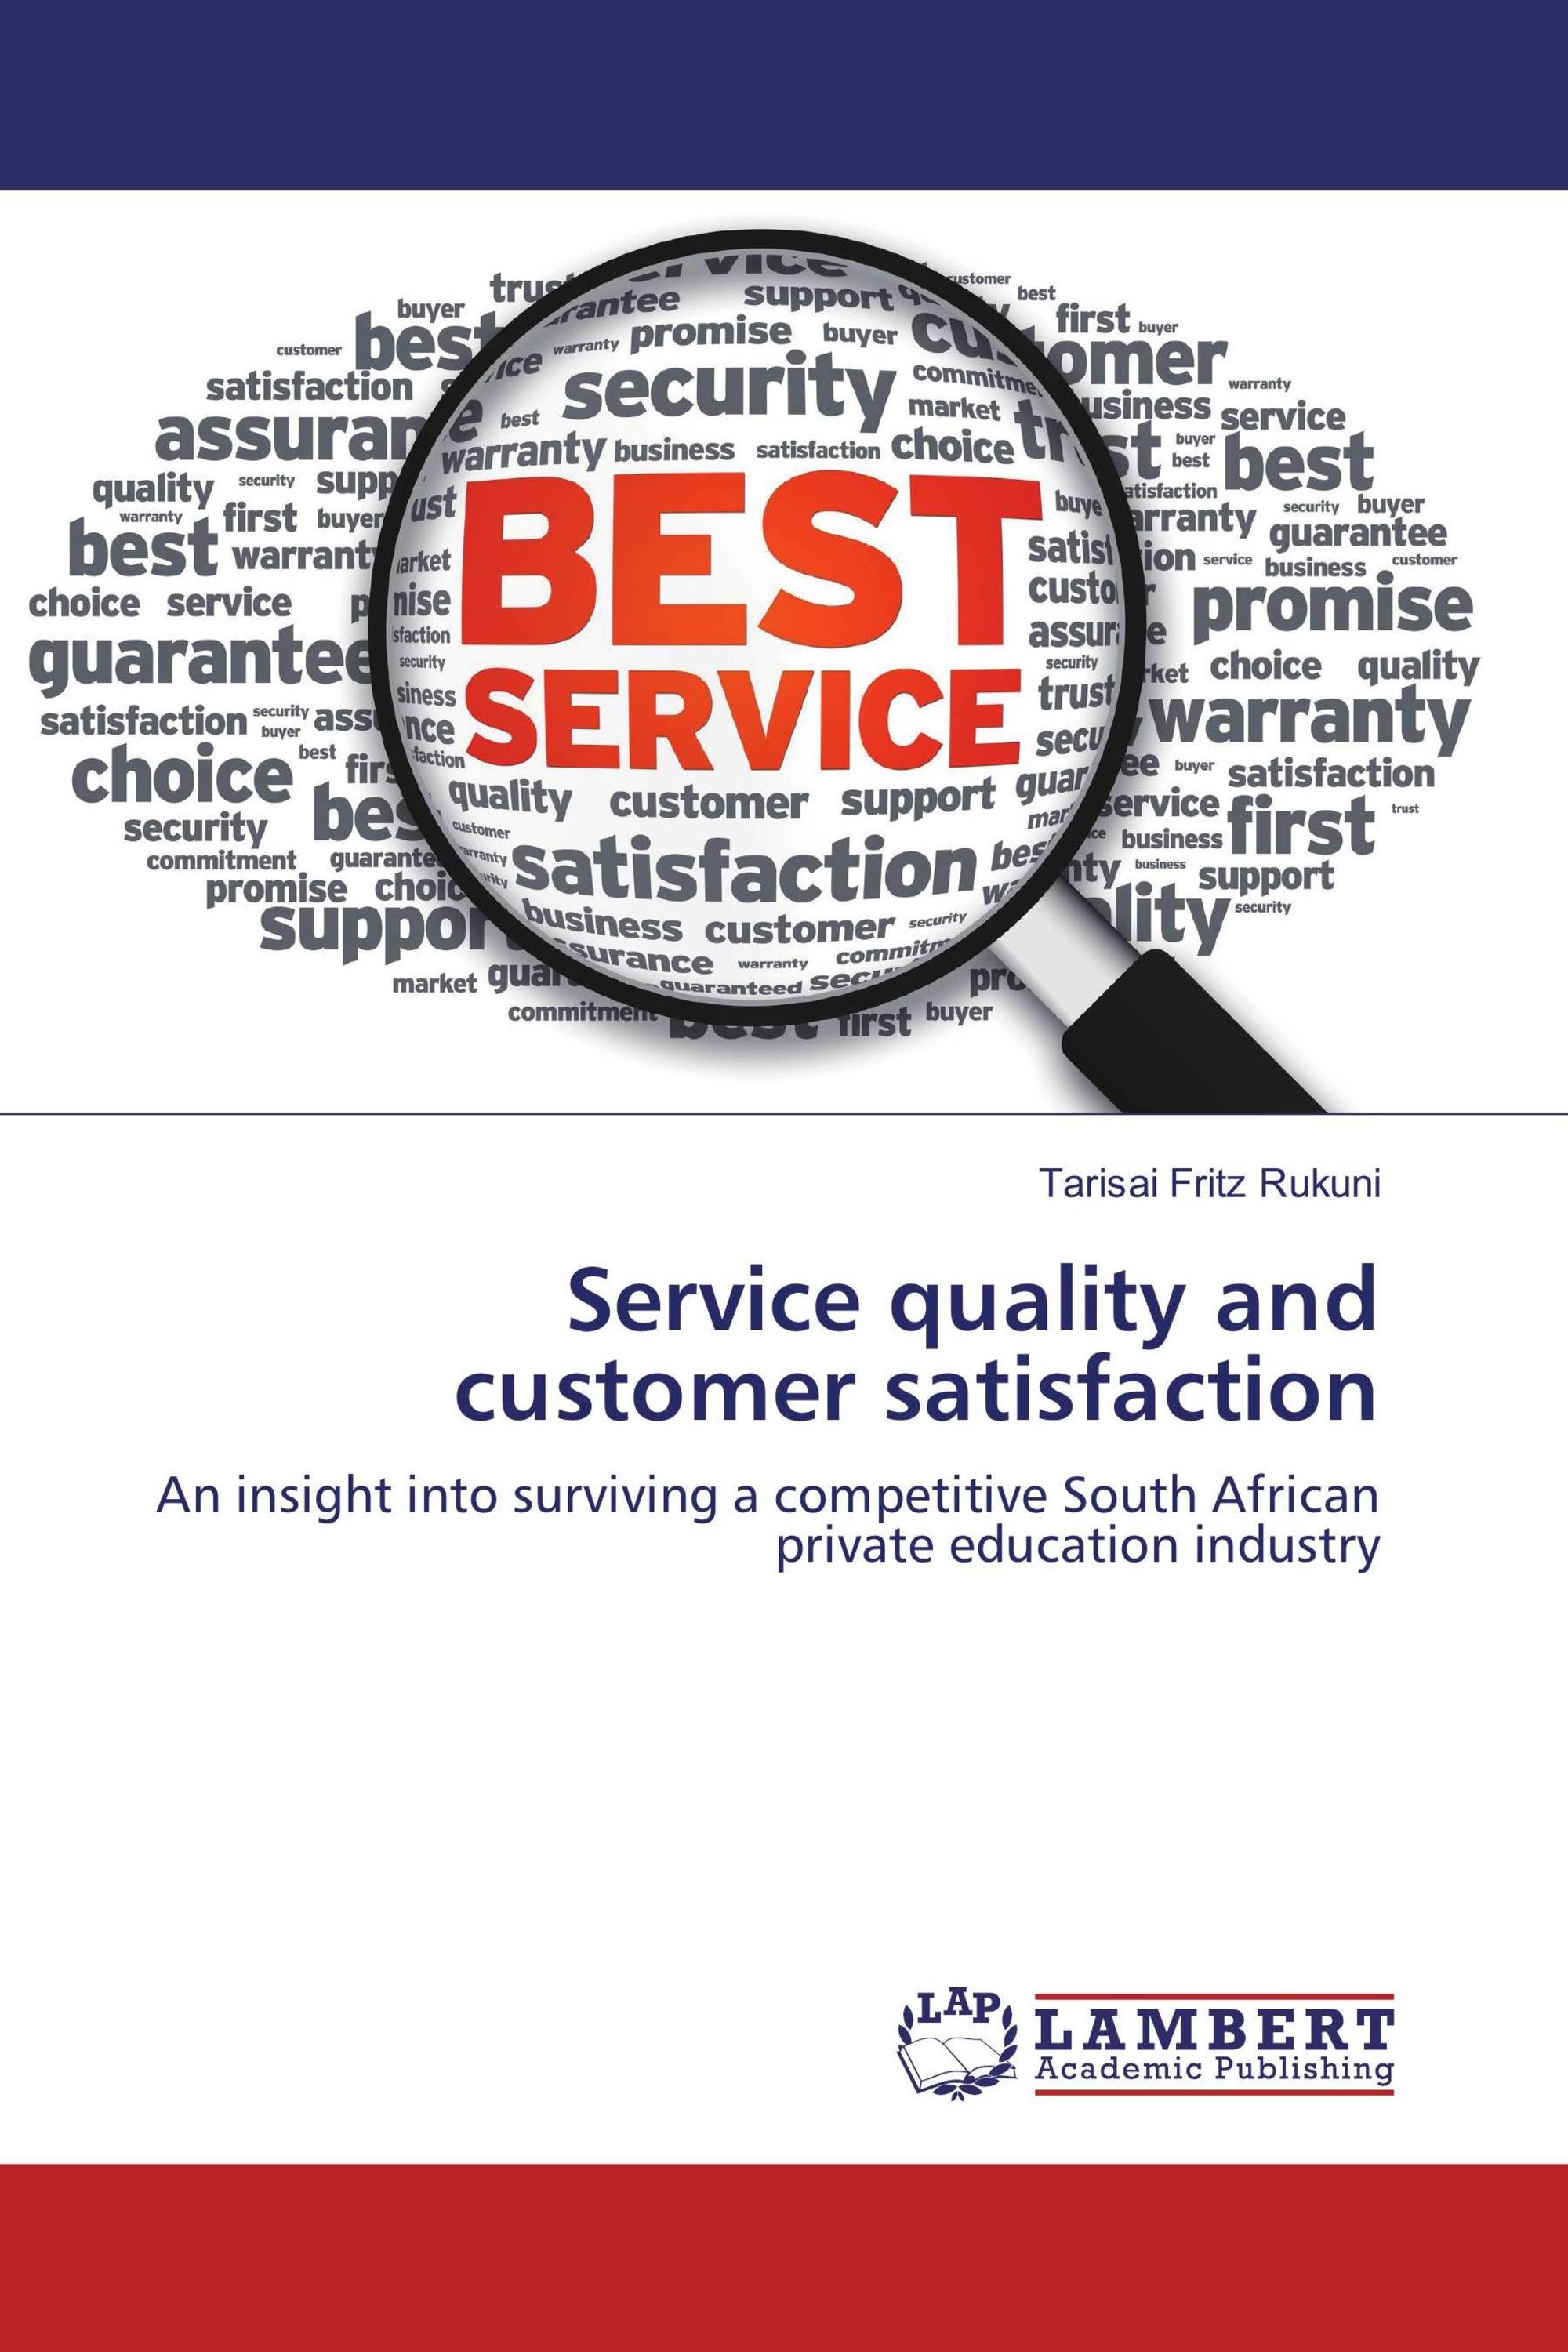 master thesis report customer satisfaction